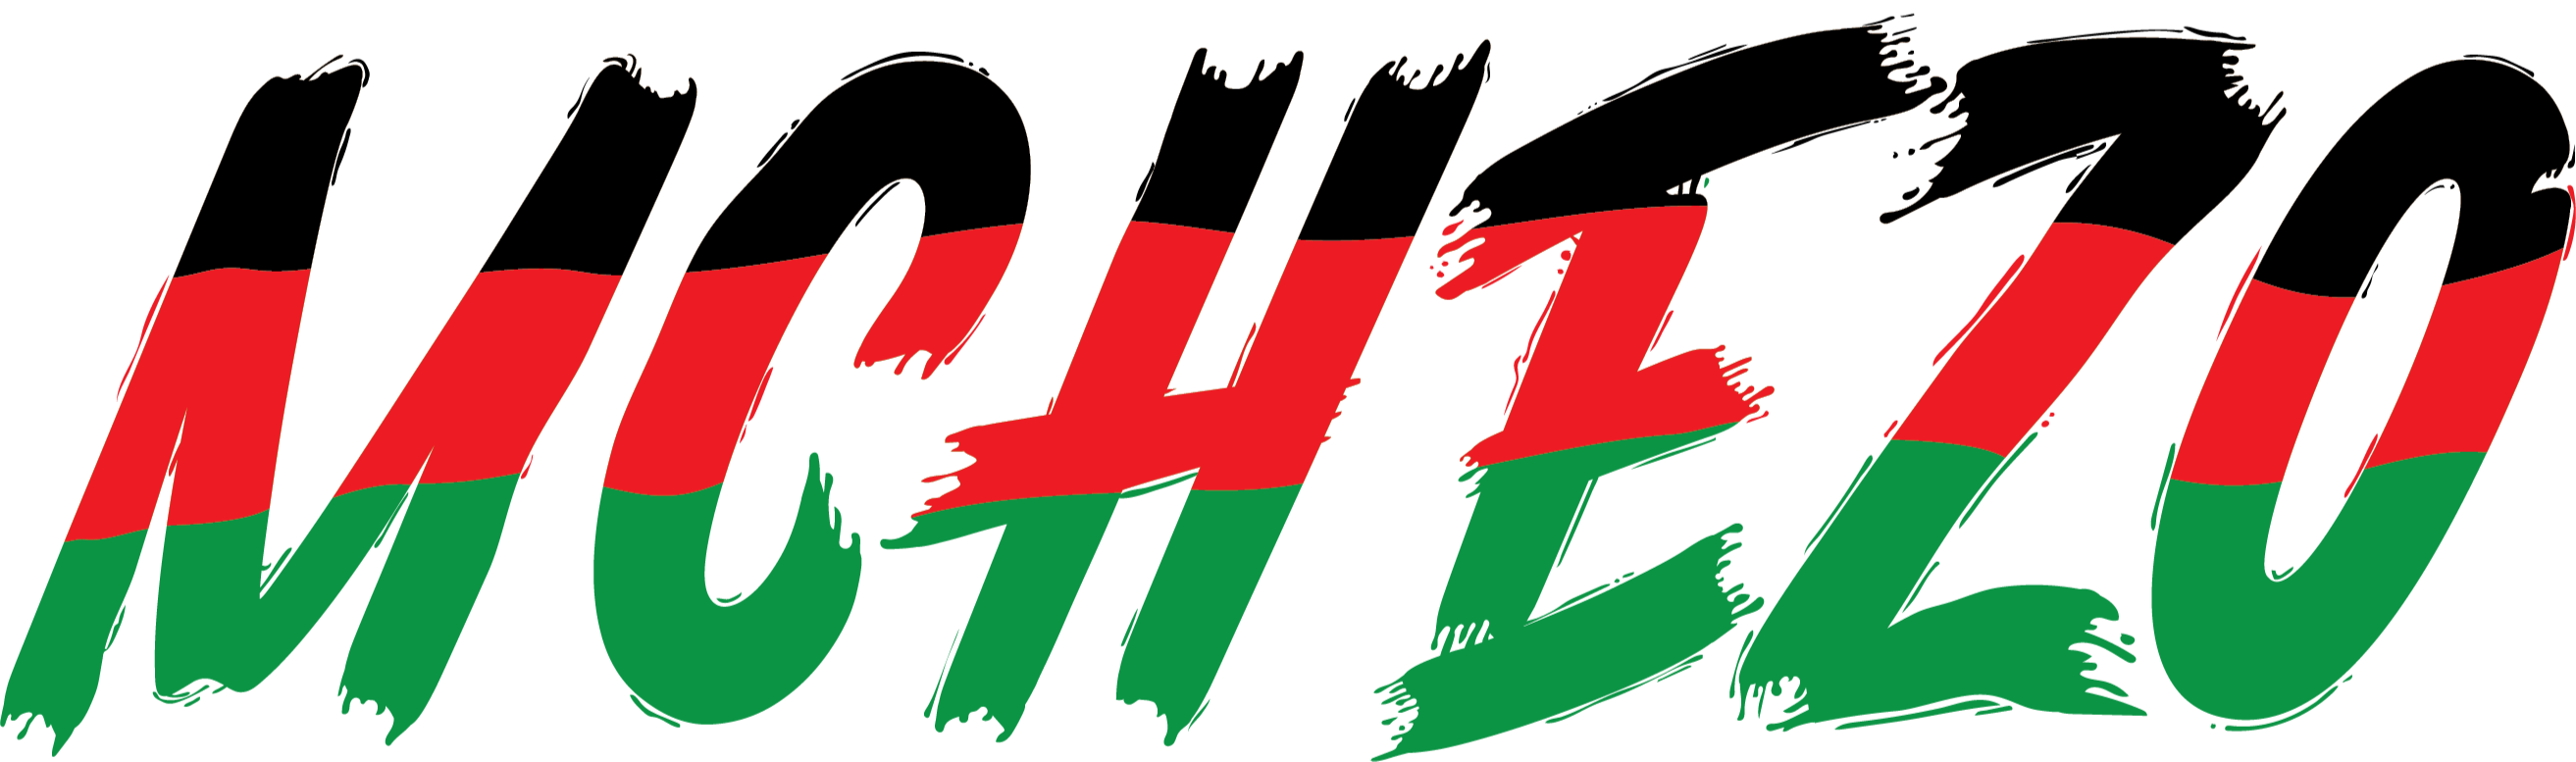 'Mchezo' Logo